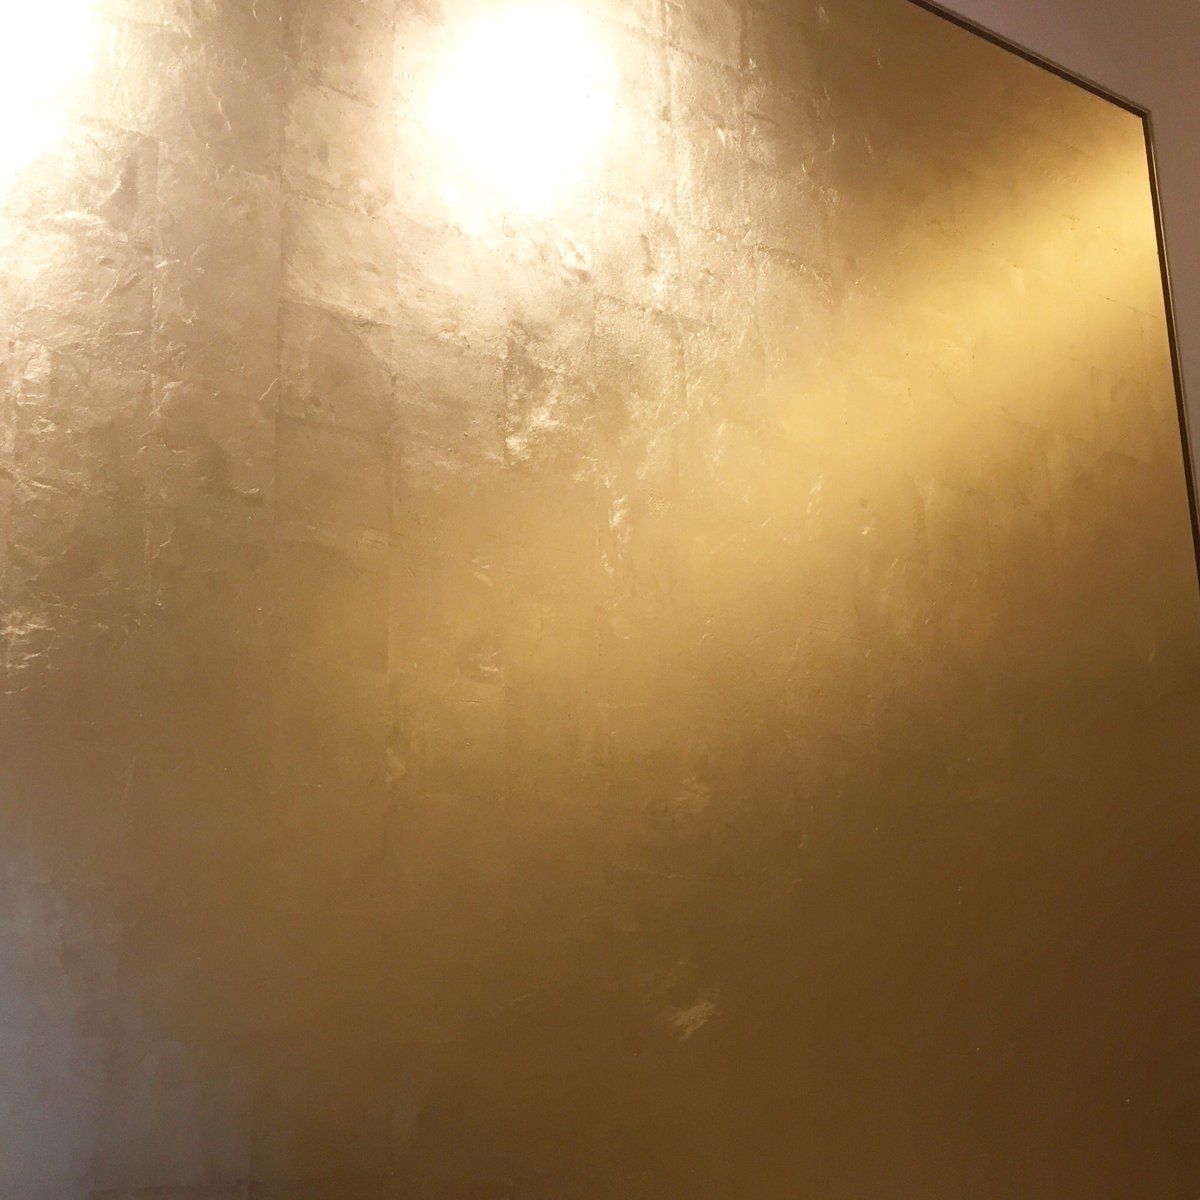 It's a gilded panel! #goldleaf #panel #oilgilding @waldoworks #style #london #luxuryinteriors #studiopeascod